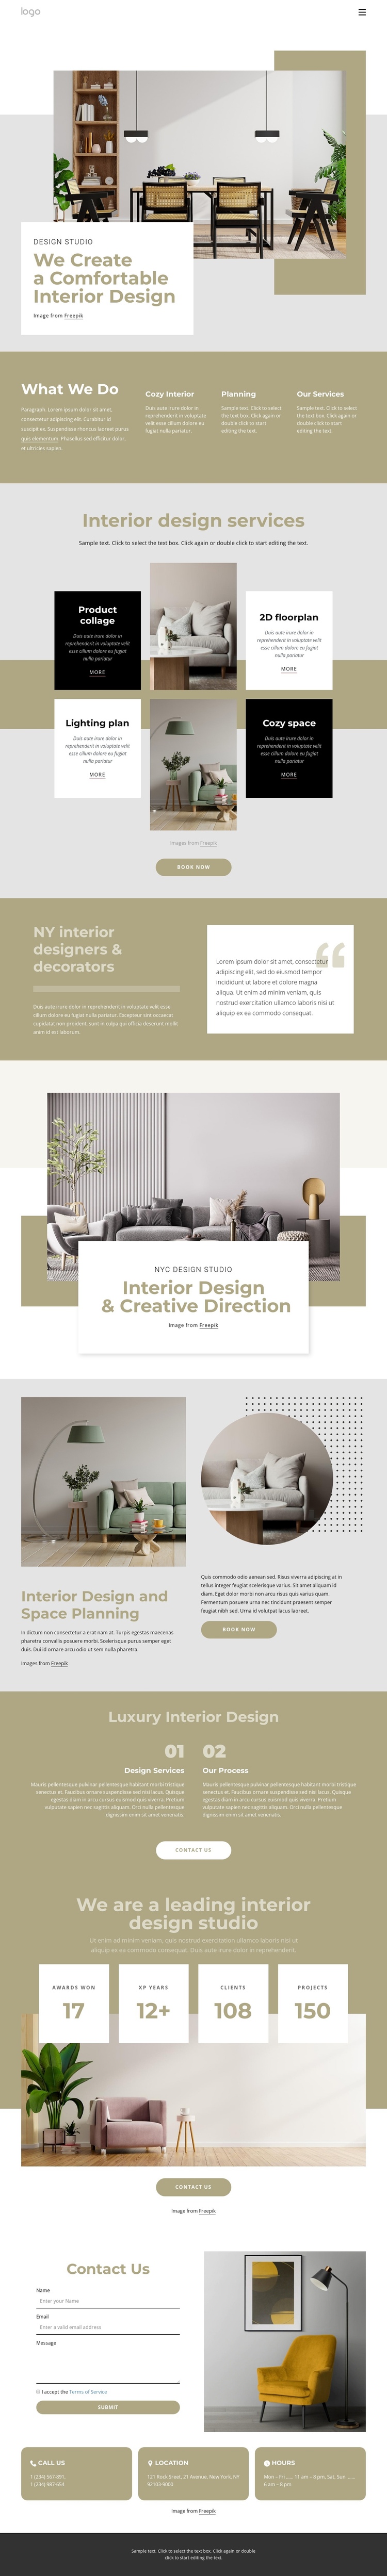 We create a comfortable interiors Website Builder Software